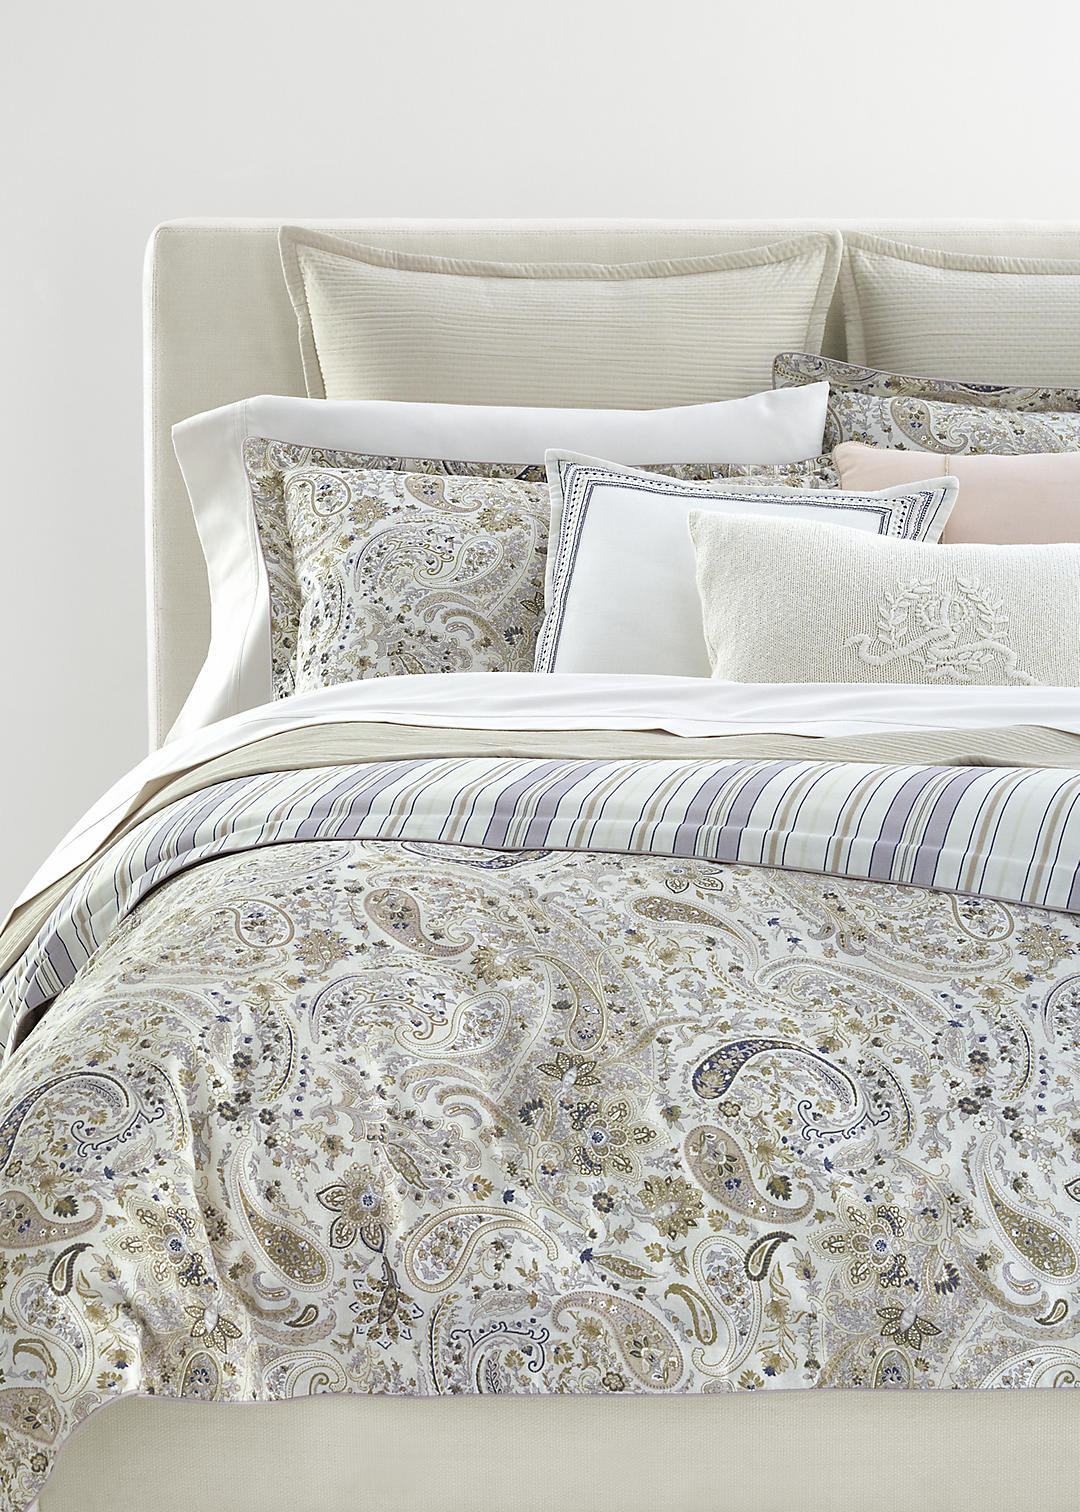 Luxury Estella Embroidery Elegant Floral Pattern Duvet Cover Bedding Set 